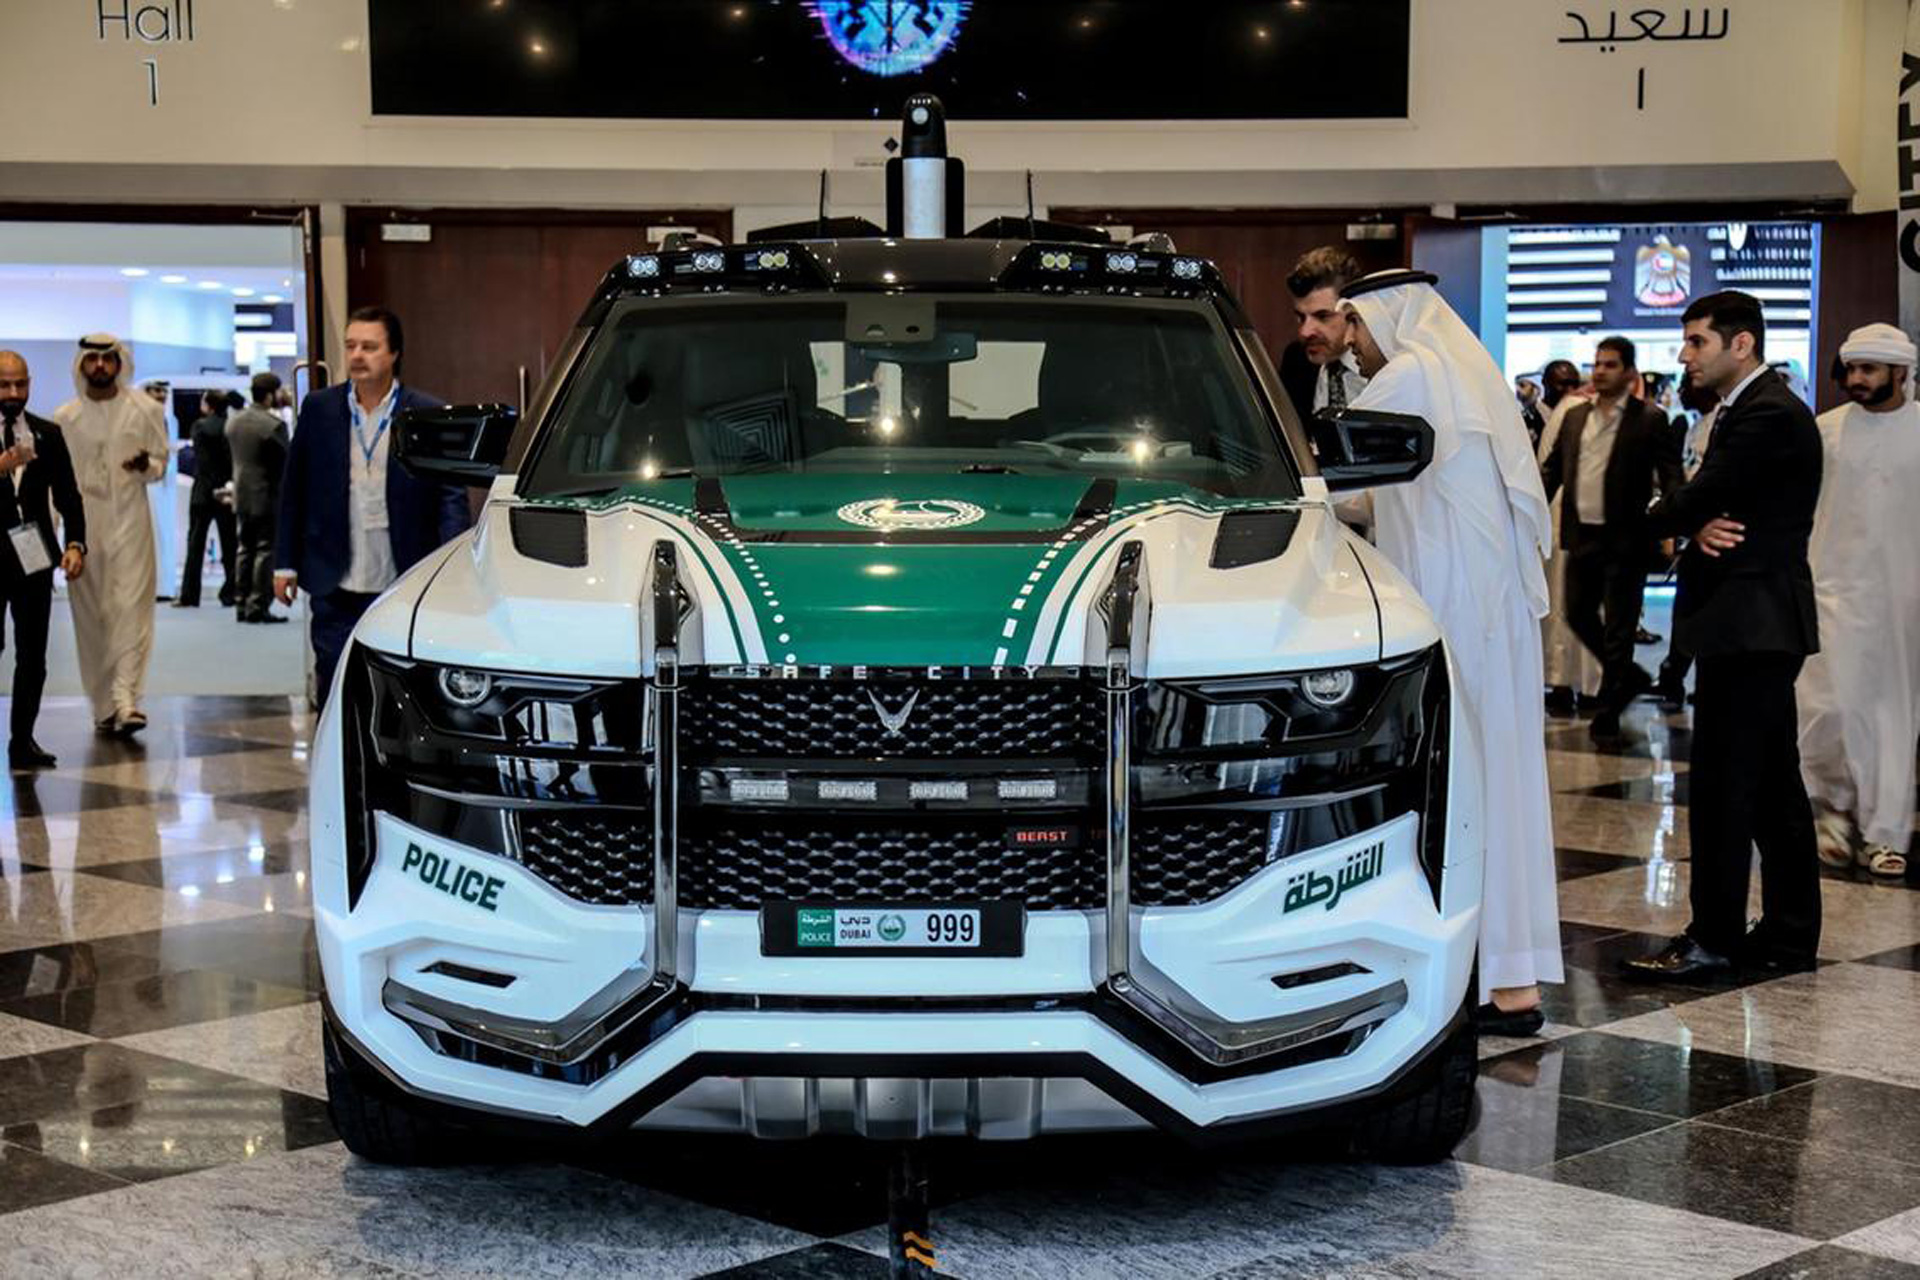 Dubai Police reveal epic new Beast Patrol vehicle Time Out Dubai